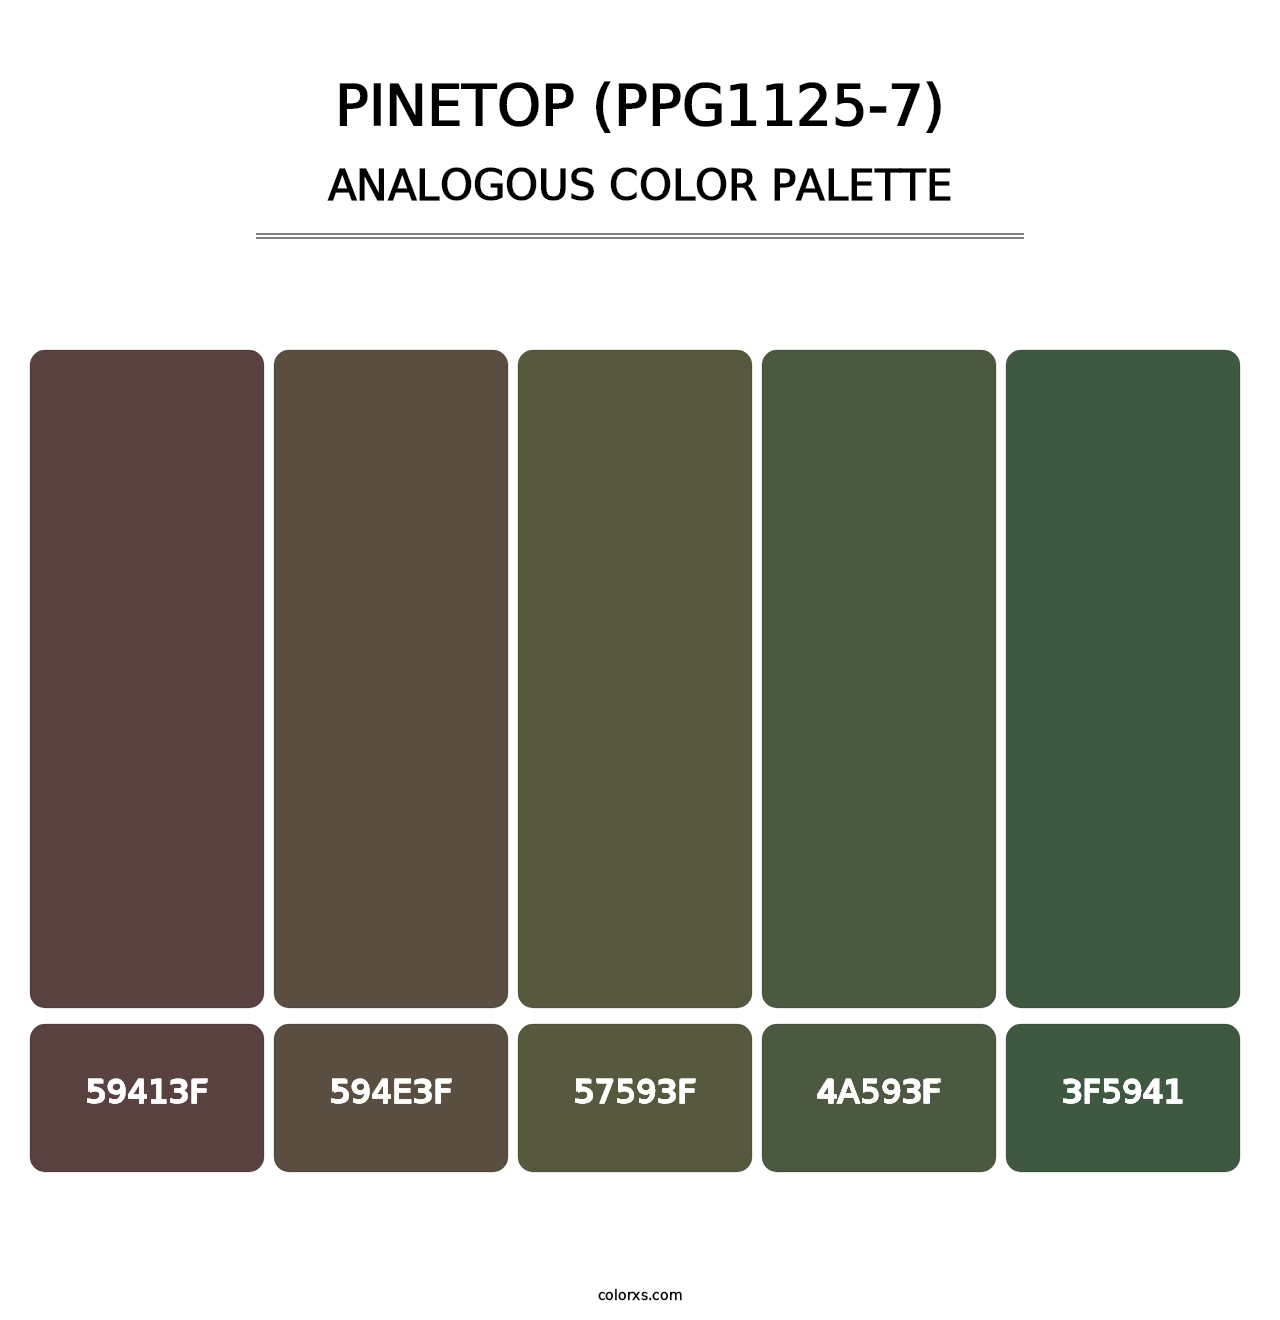 Pinetop (PPG1125-7) - Analogous Color Palette